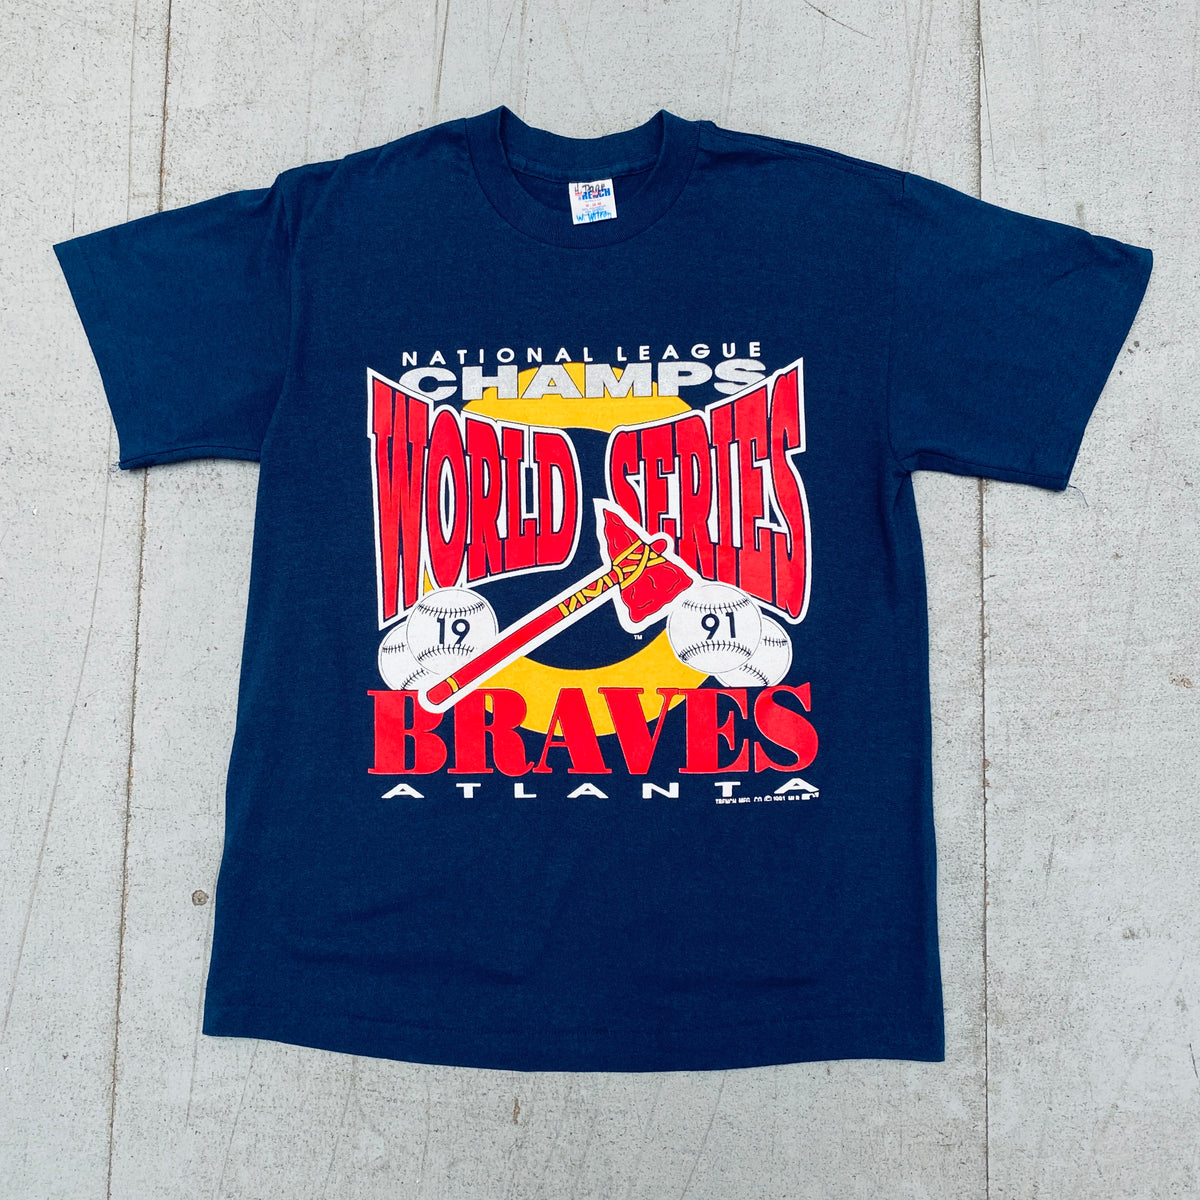 St-Louis Cardinals MLB 1991 vintage Tshirt